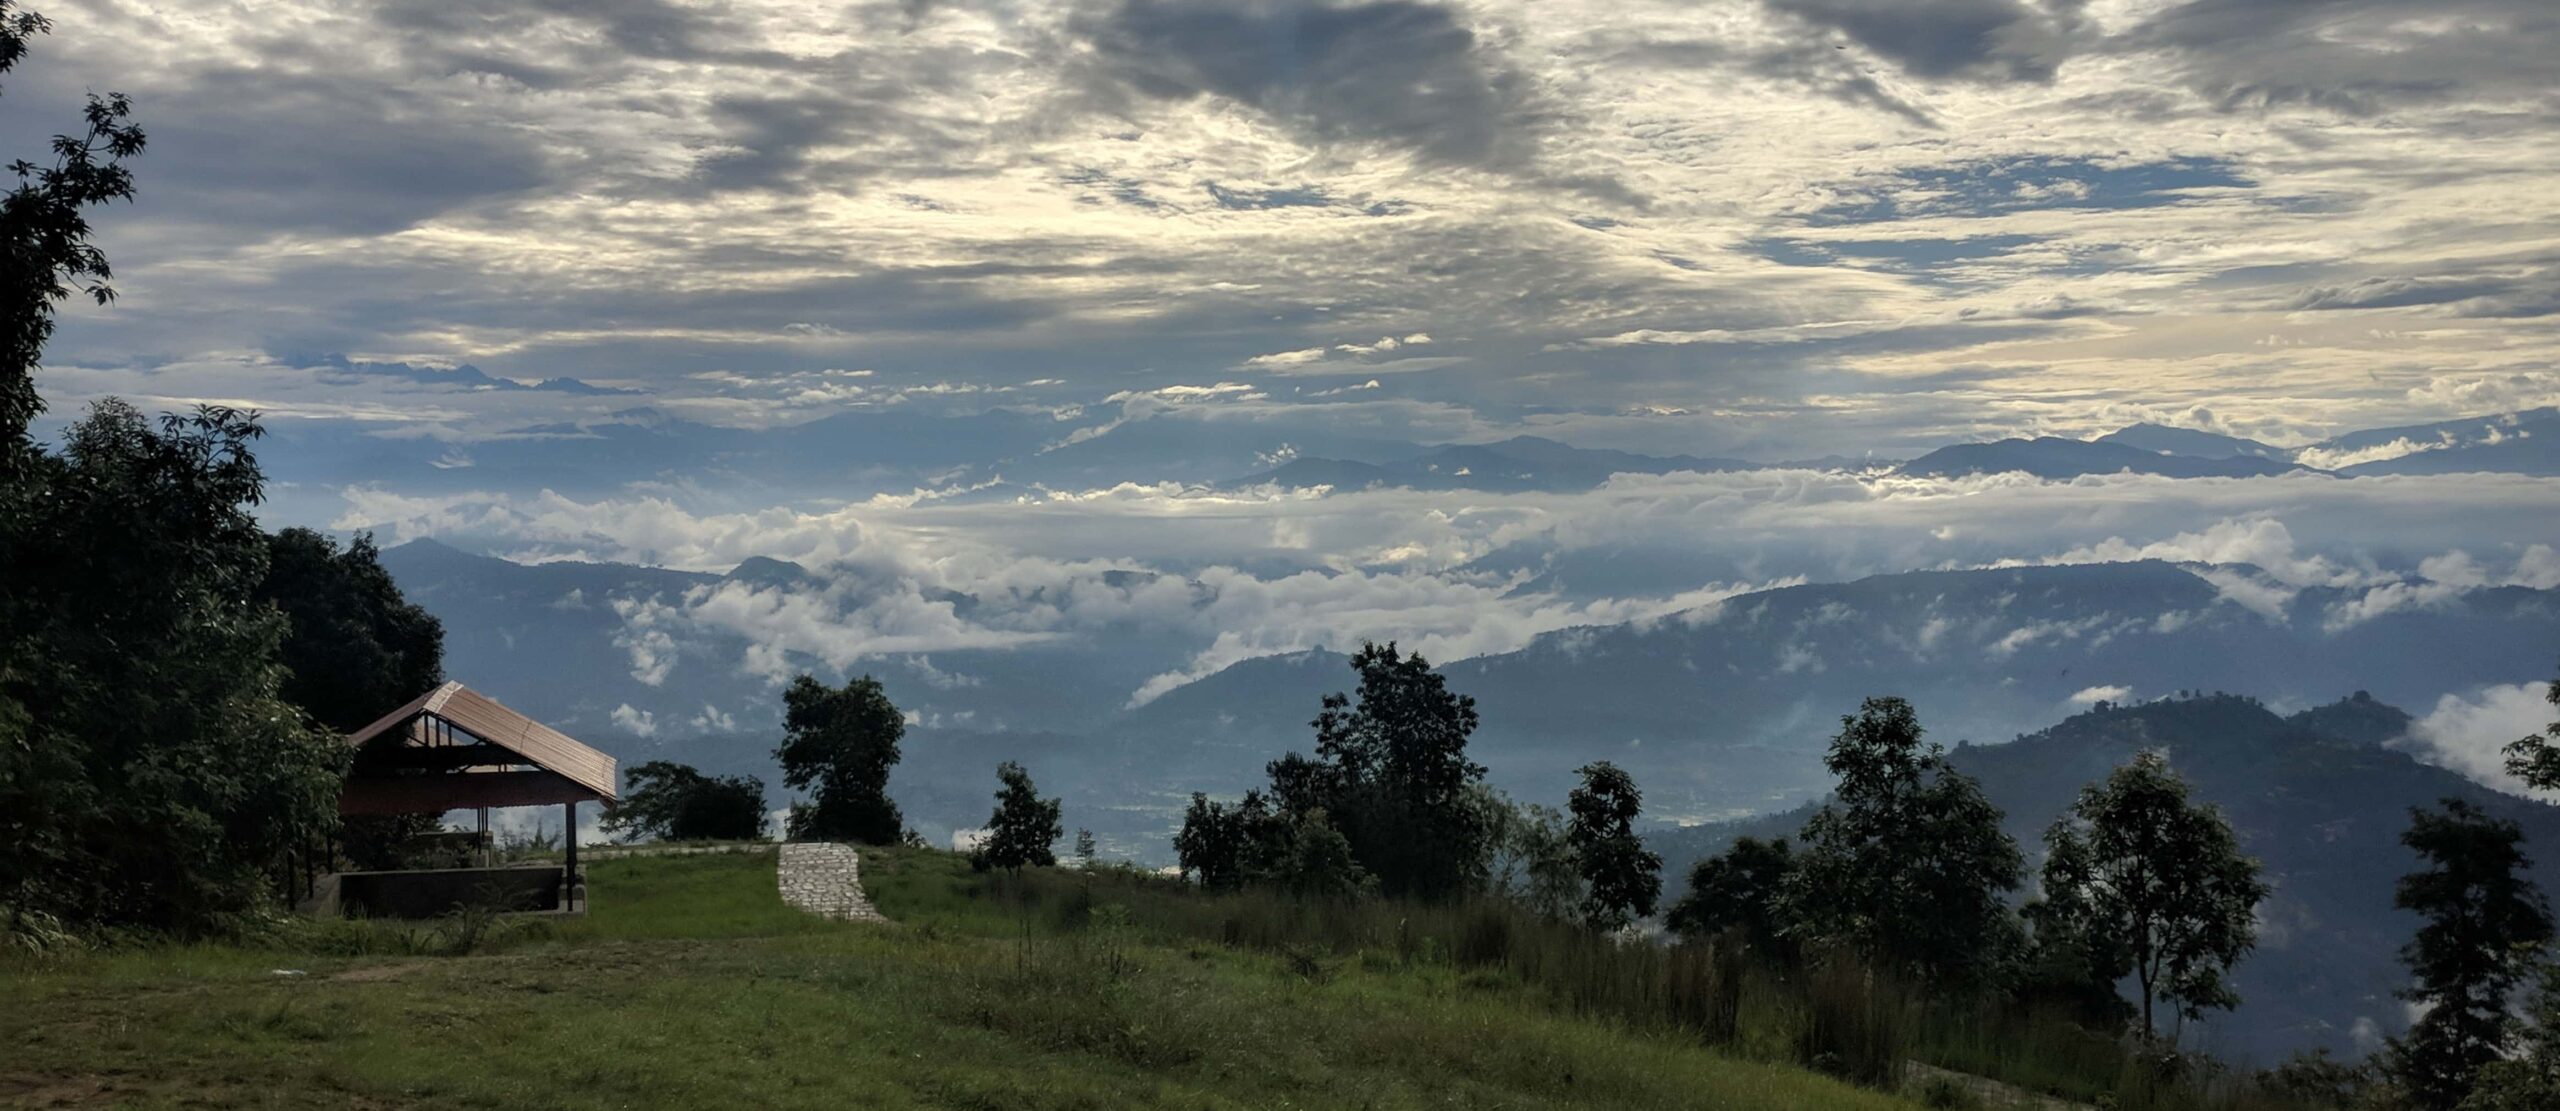  Banepa gosaithan hilltop view